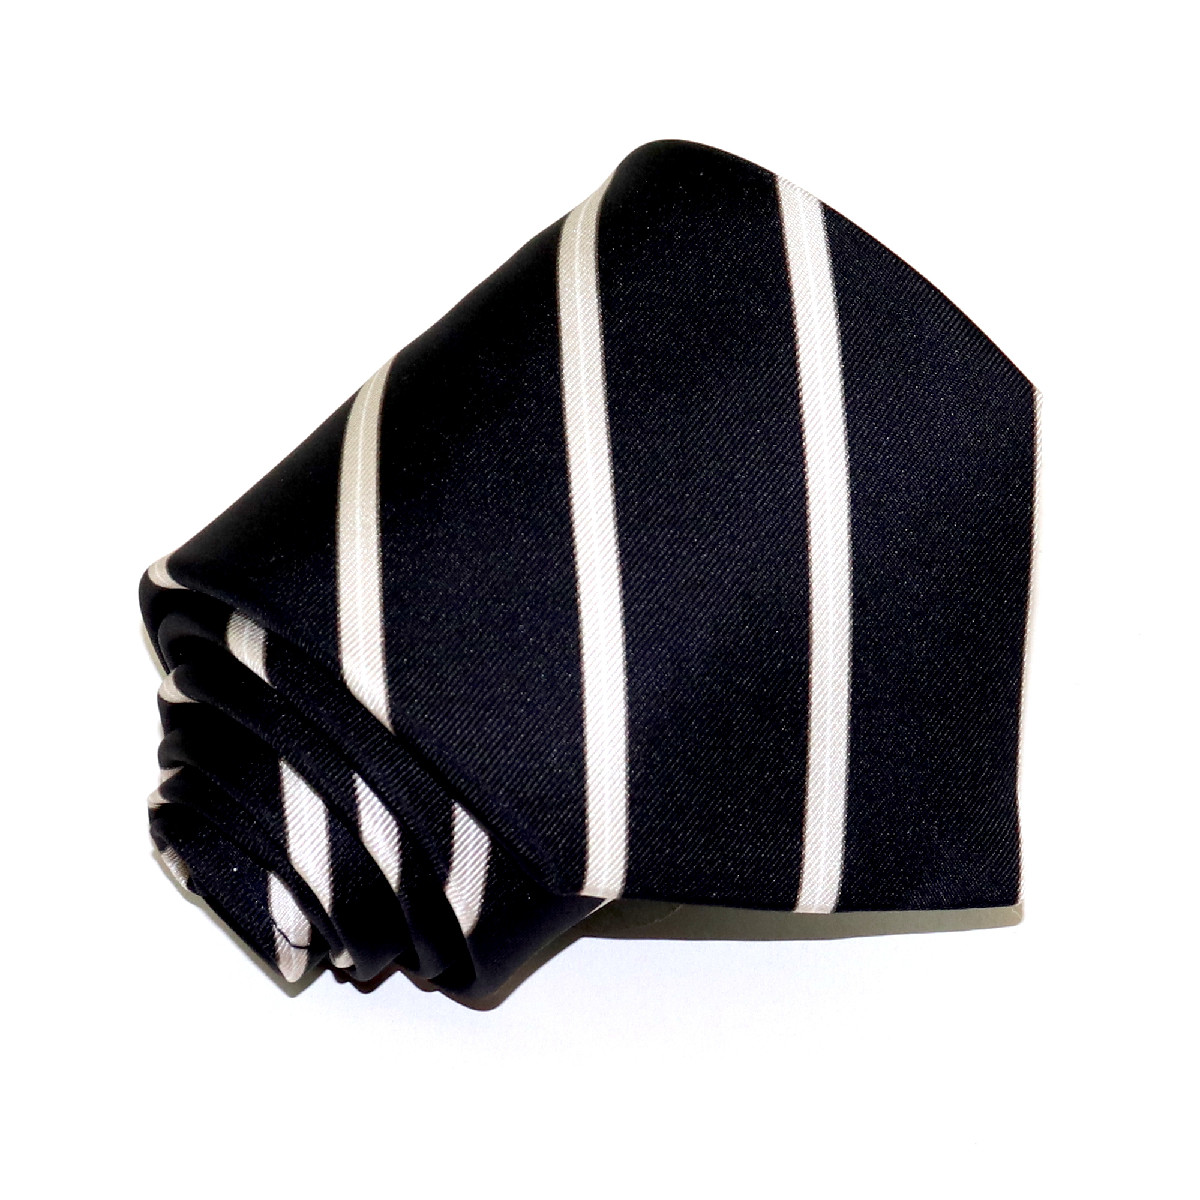 Formal regimental tie, black background and white medium stripes ...